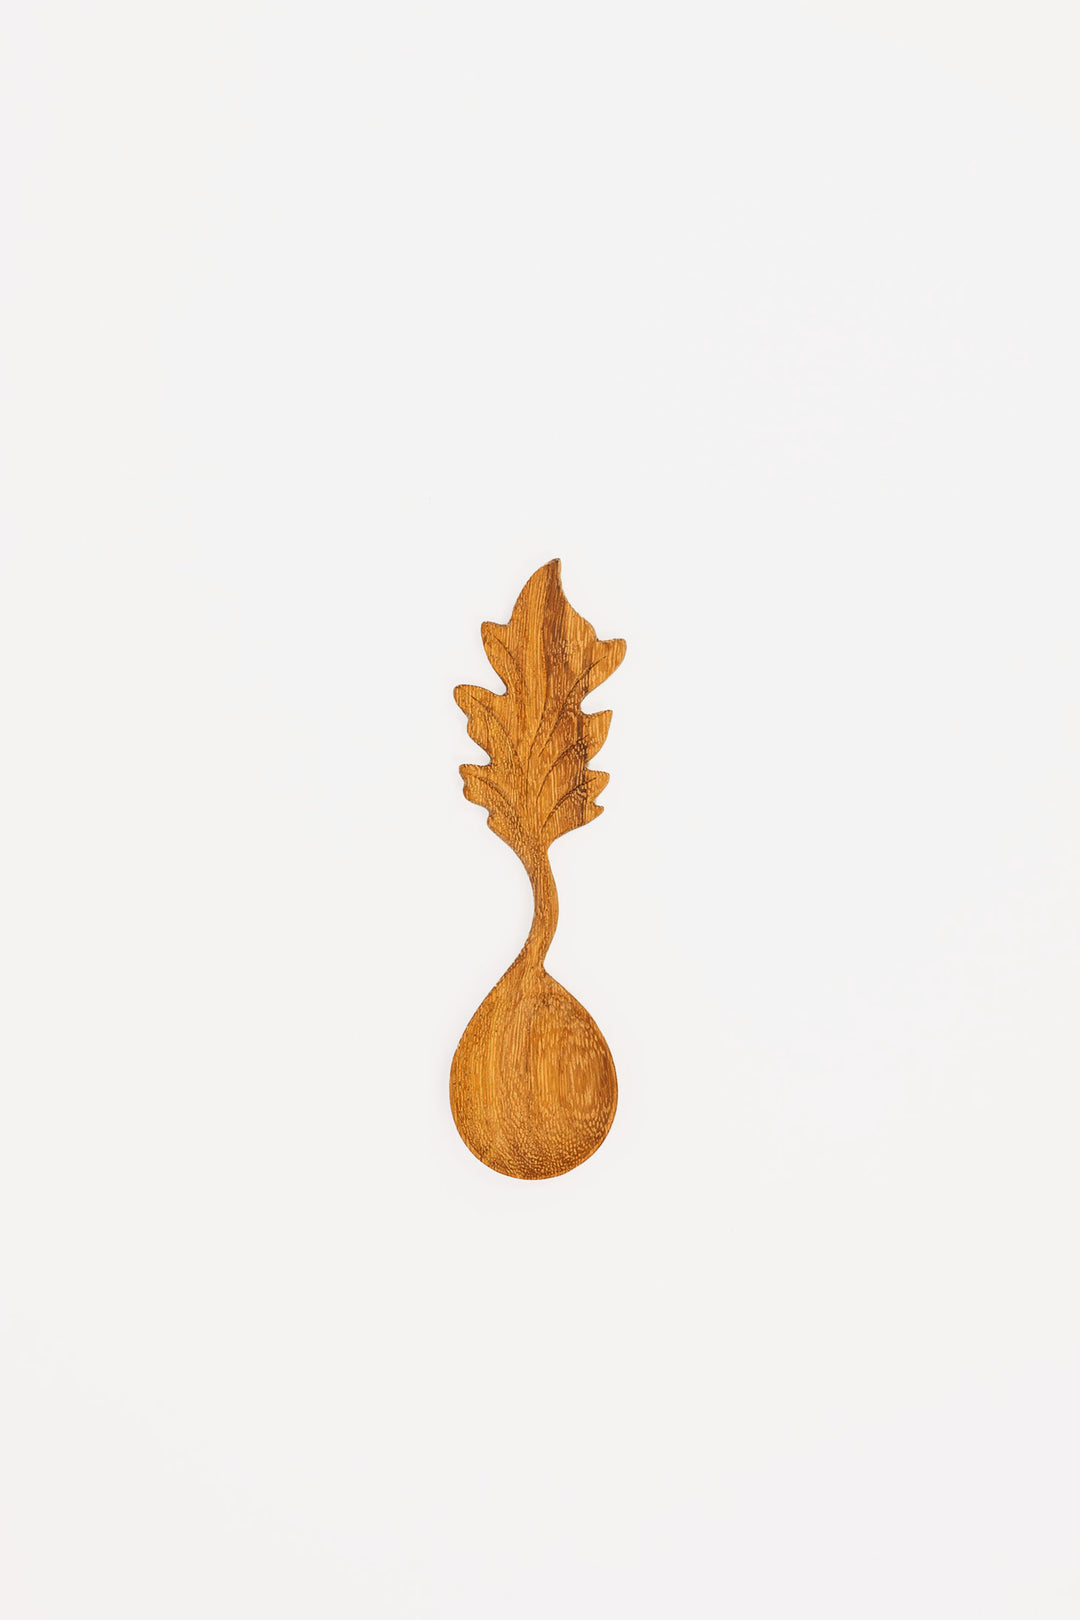 Carved Wooden Spoon Leaf Handle